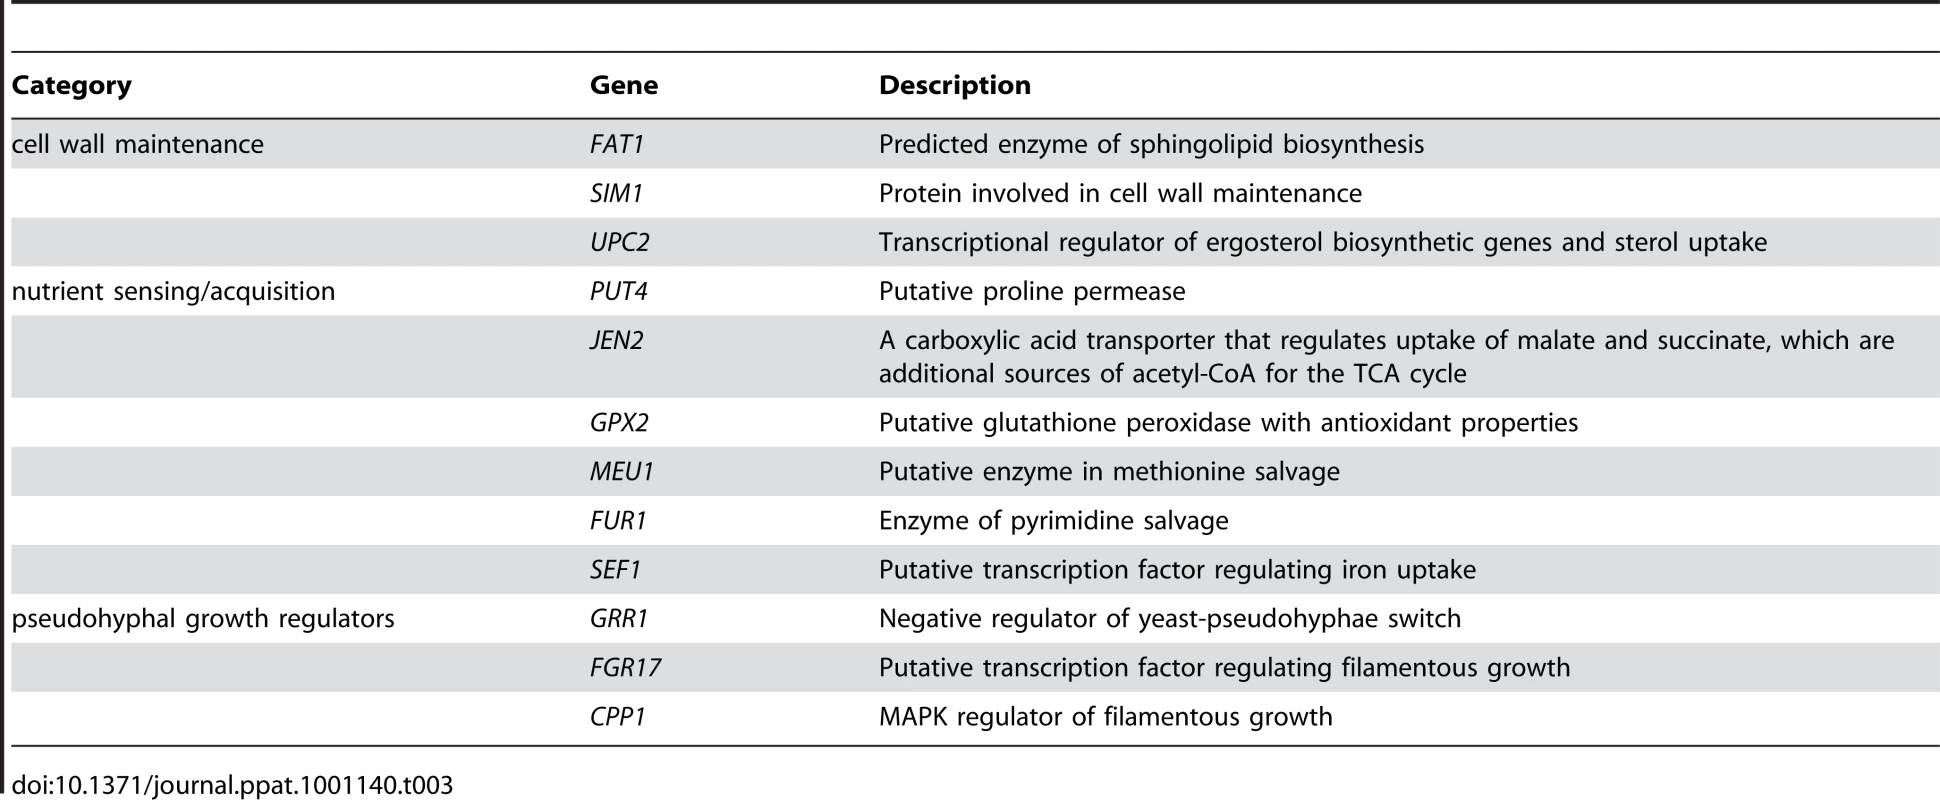 Categories of genes haploinsufficient in reduced-nutrient conditions.